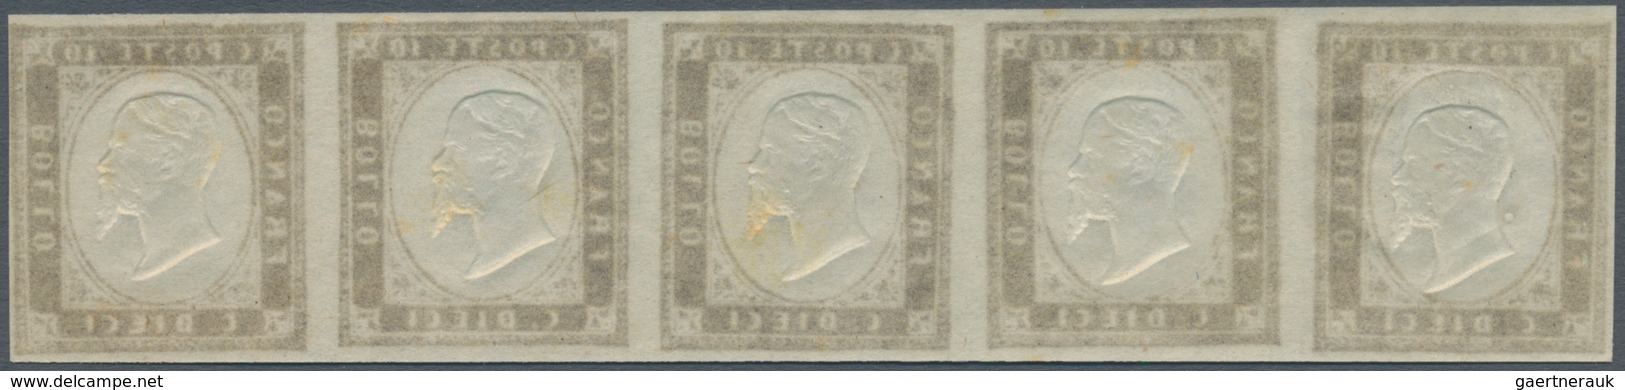 00839 Italien - Altitalienische Staaten: Sardinien: 1858: 10 Cents Dark Chocolate Brown, 1859 Printing, Ho - Sardinia